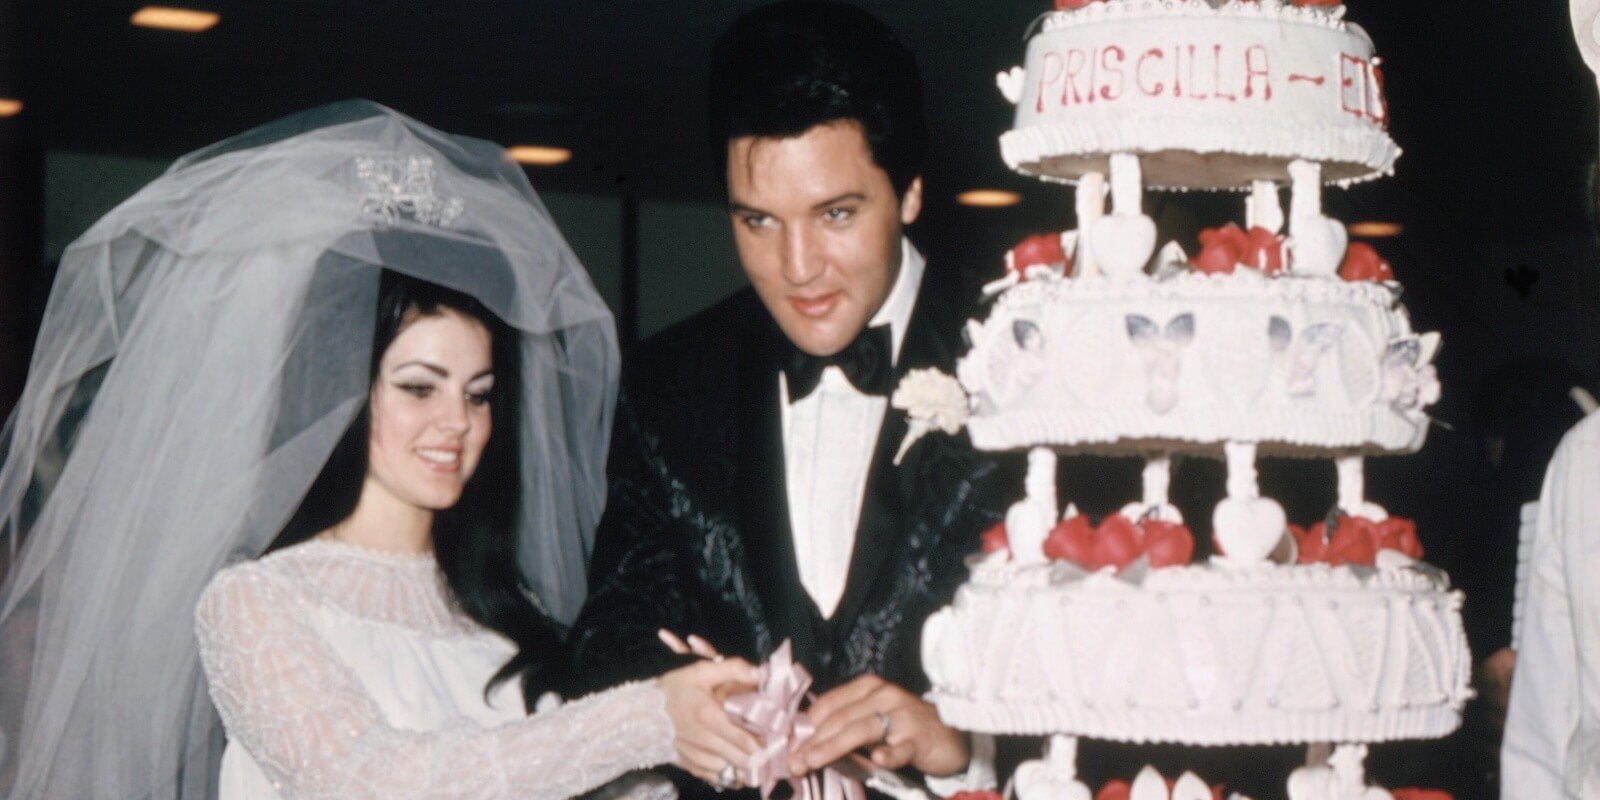 Prisiclla and Elvis Presley's wedding was held in Las Vegas, Nevada.